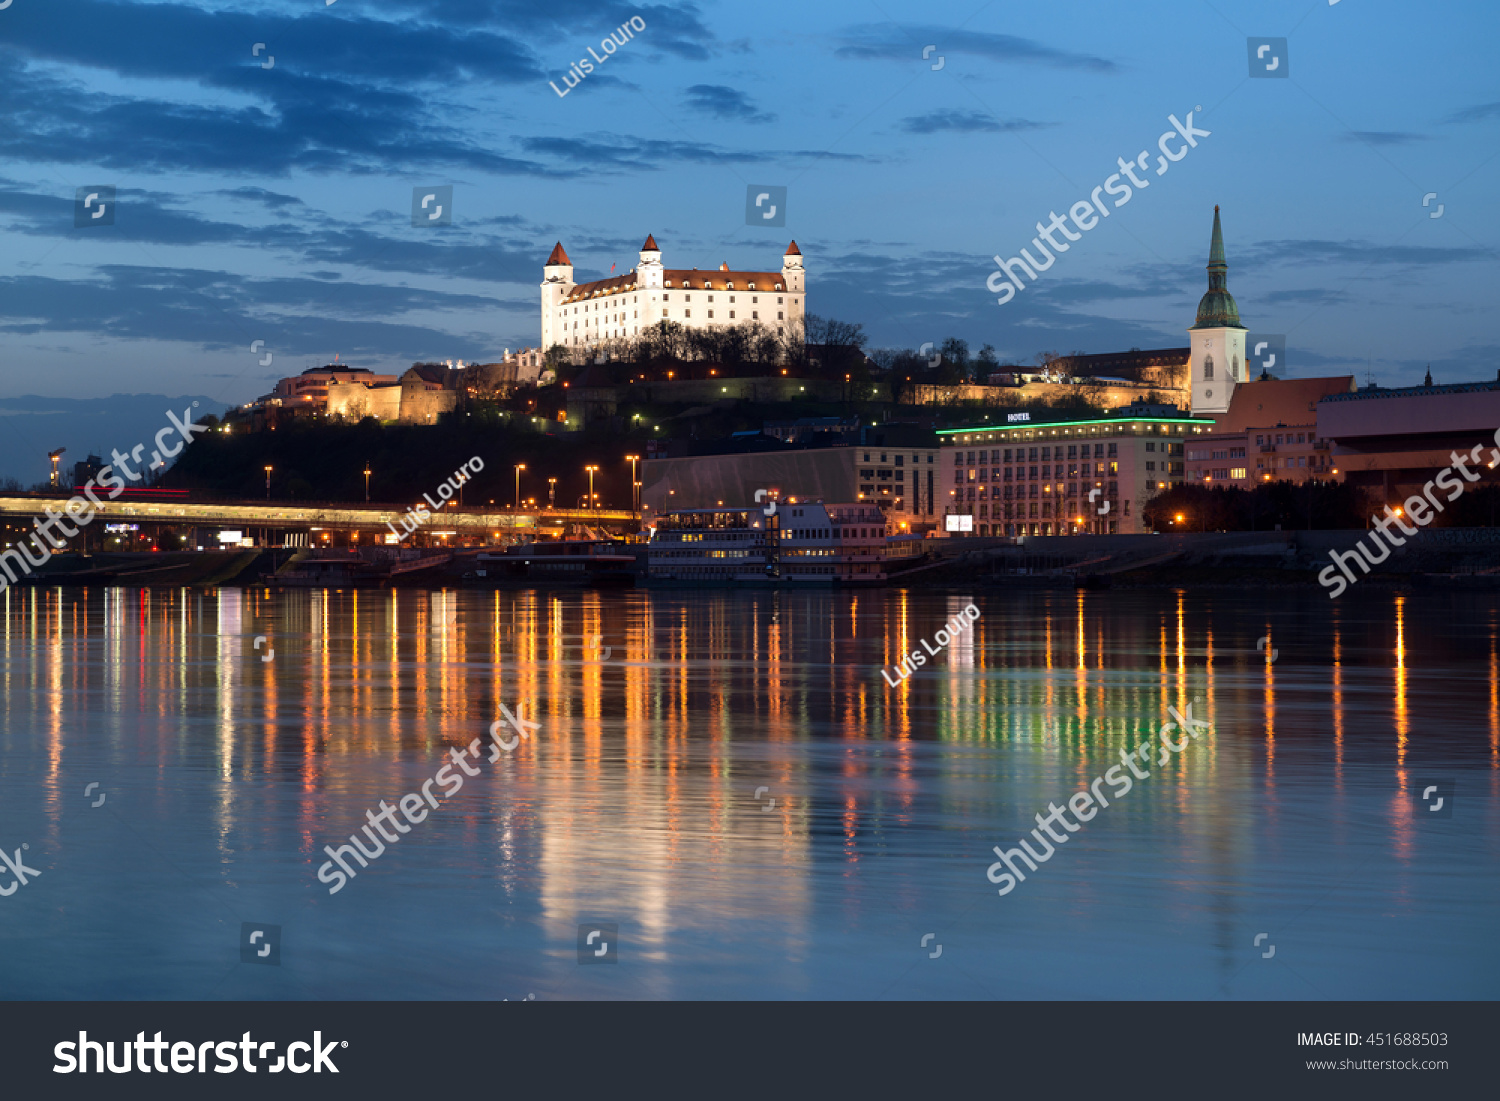 Beautiful view of Bratislava castle at night in Slovakia #451688503